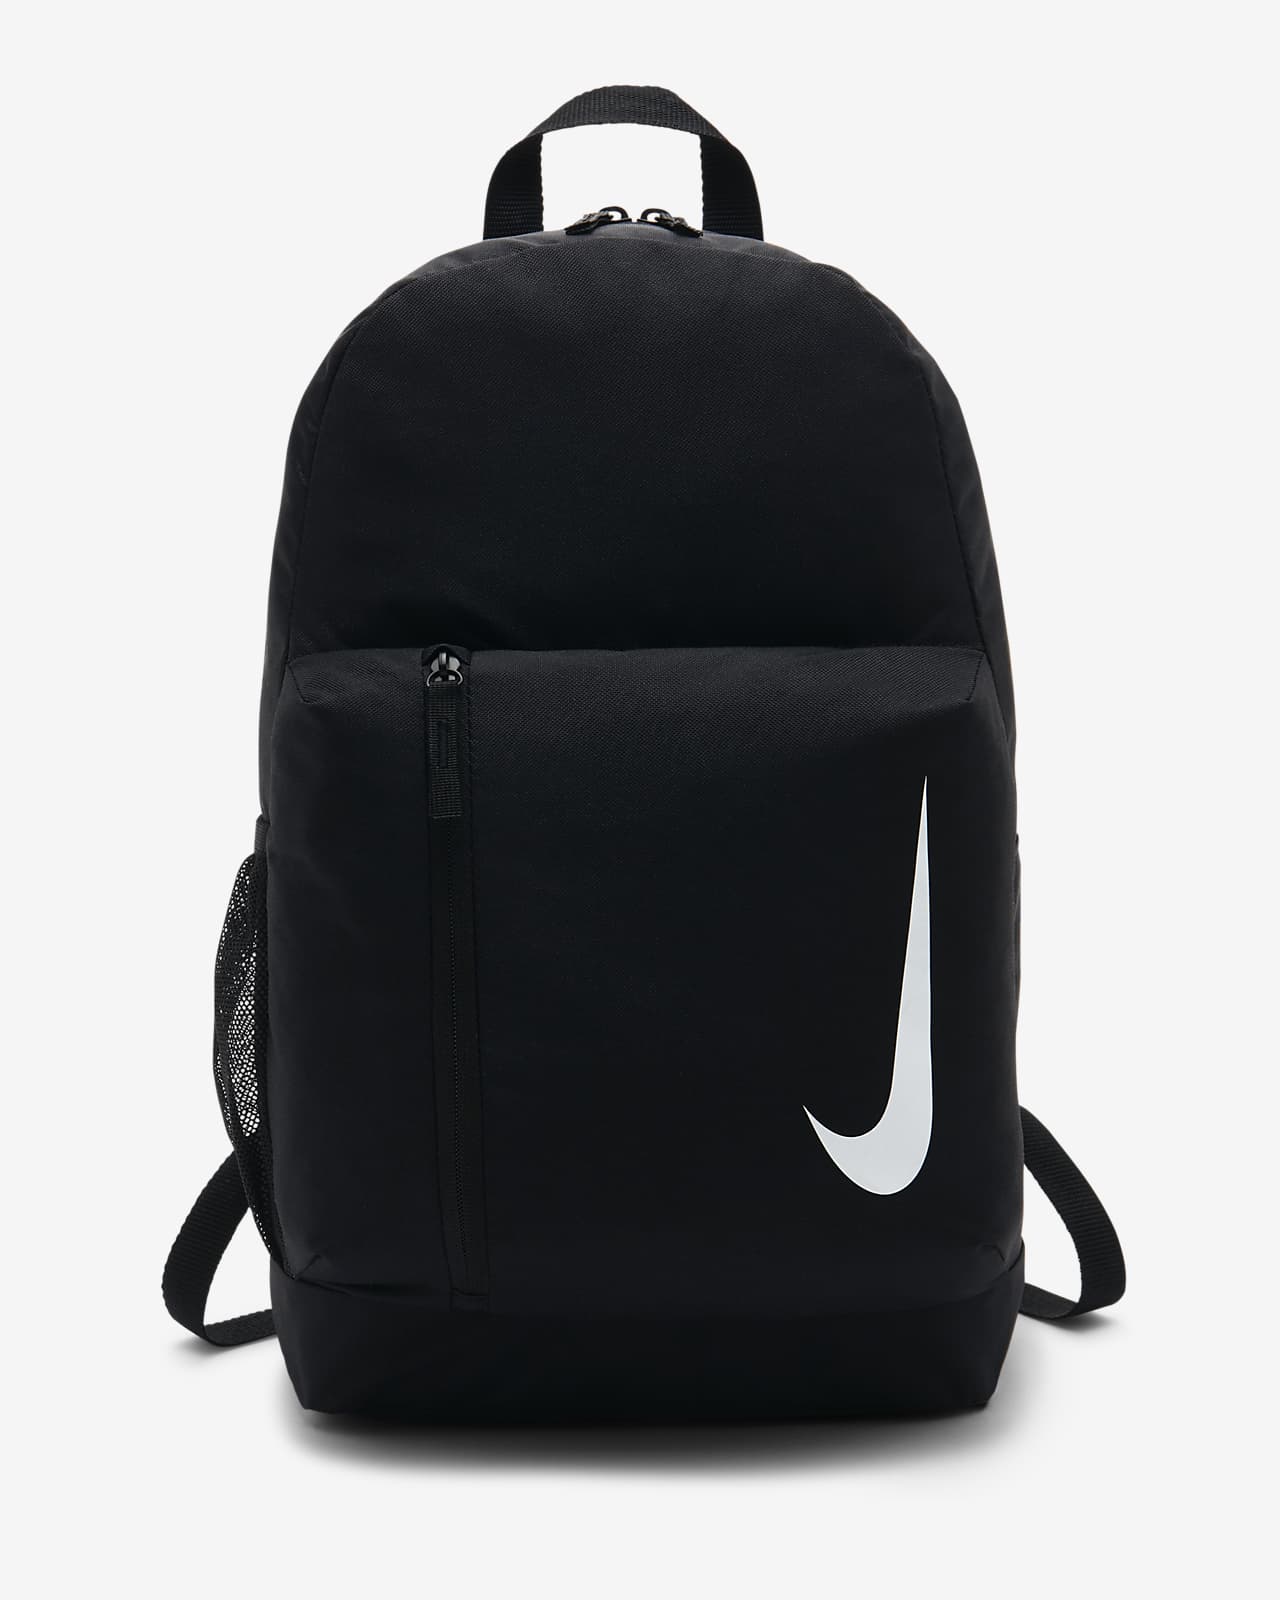 nike academy backpack size